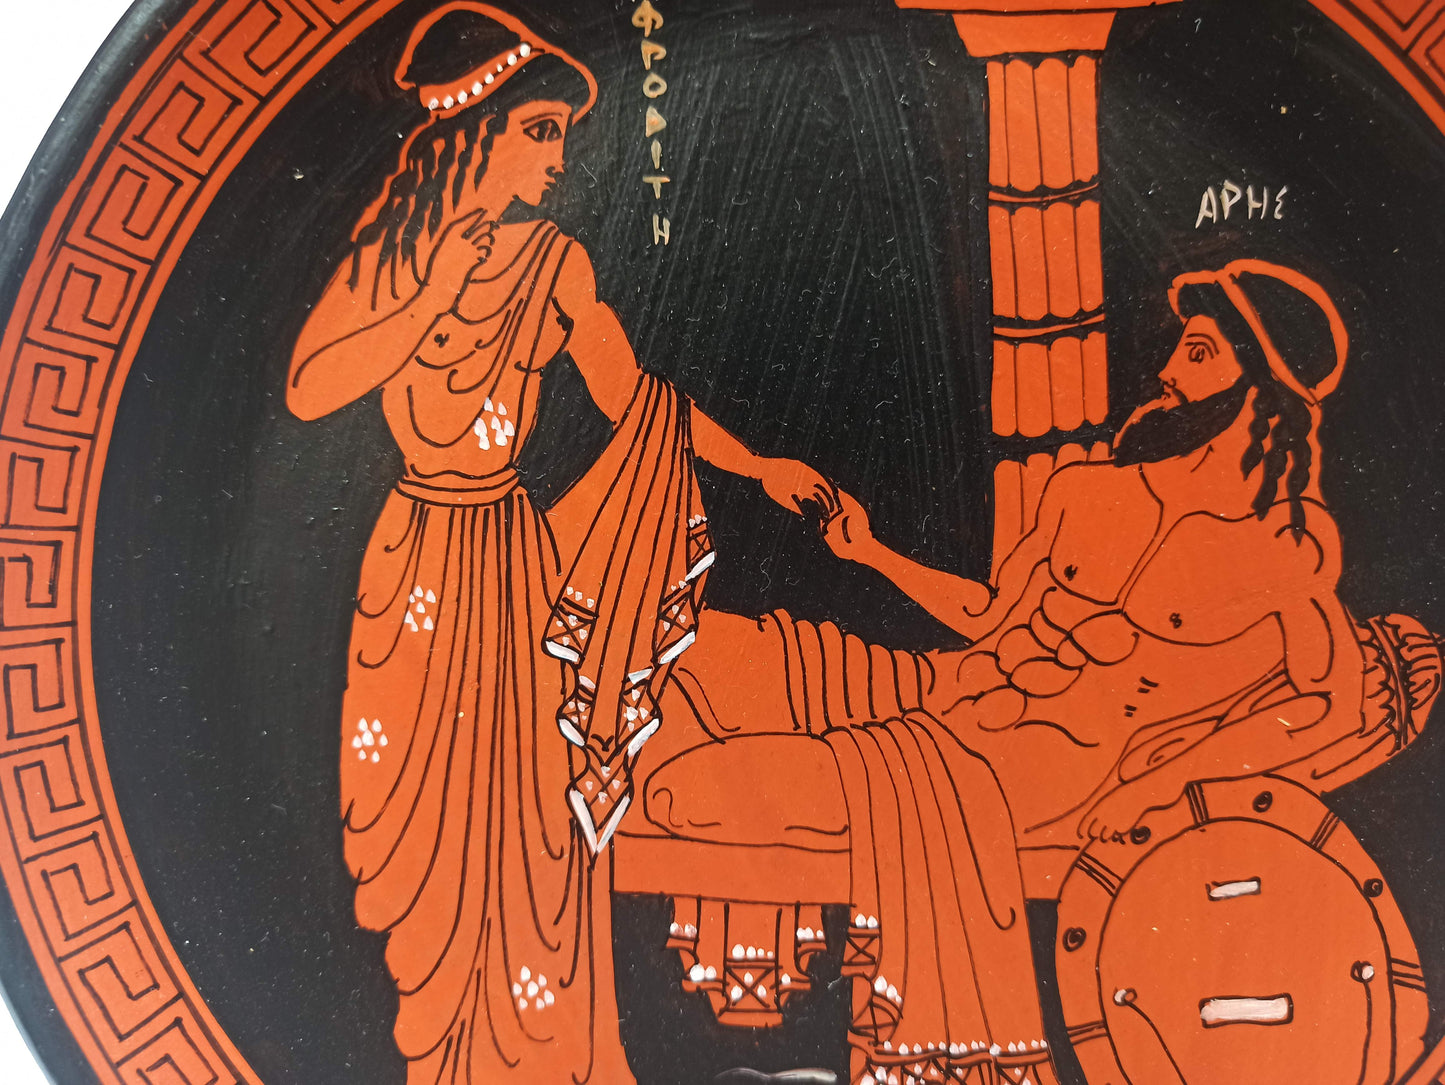 Aphrodite Venus - Greek Roman Goddess Of Love, Beauty, Fertility - Ares Mars - Greek Roman God of War and Courage - Ceramic plate